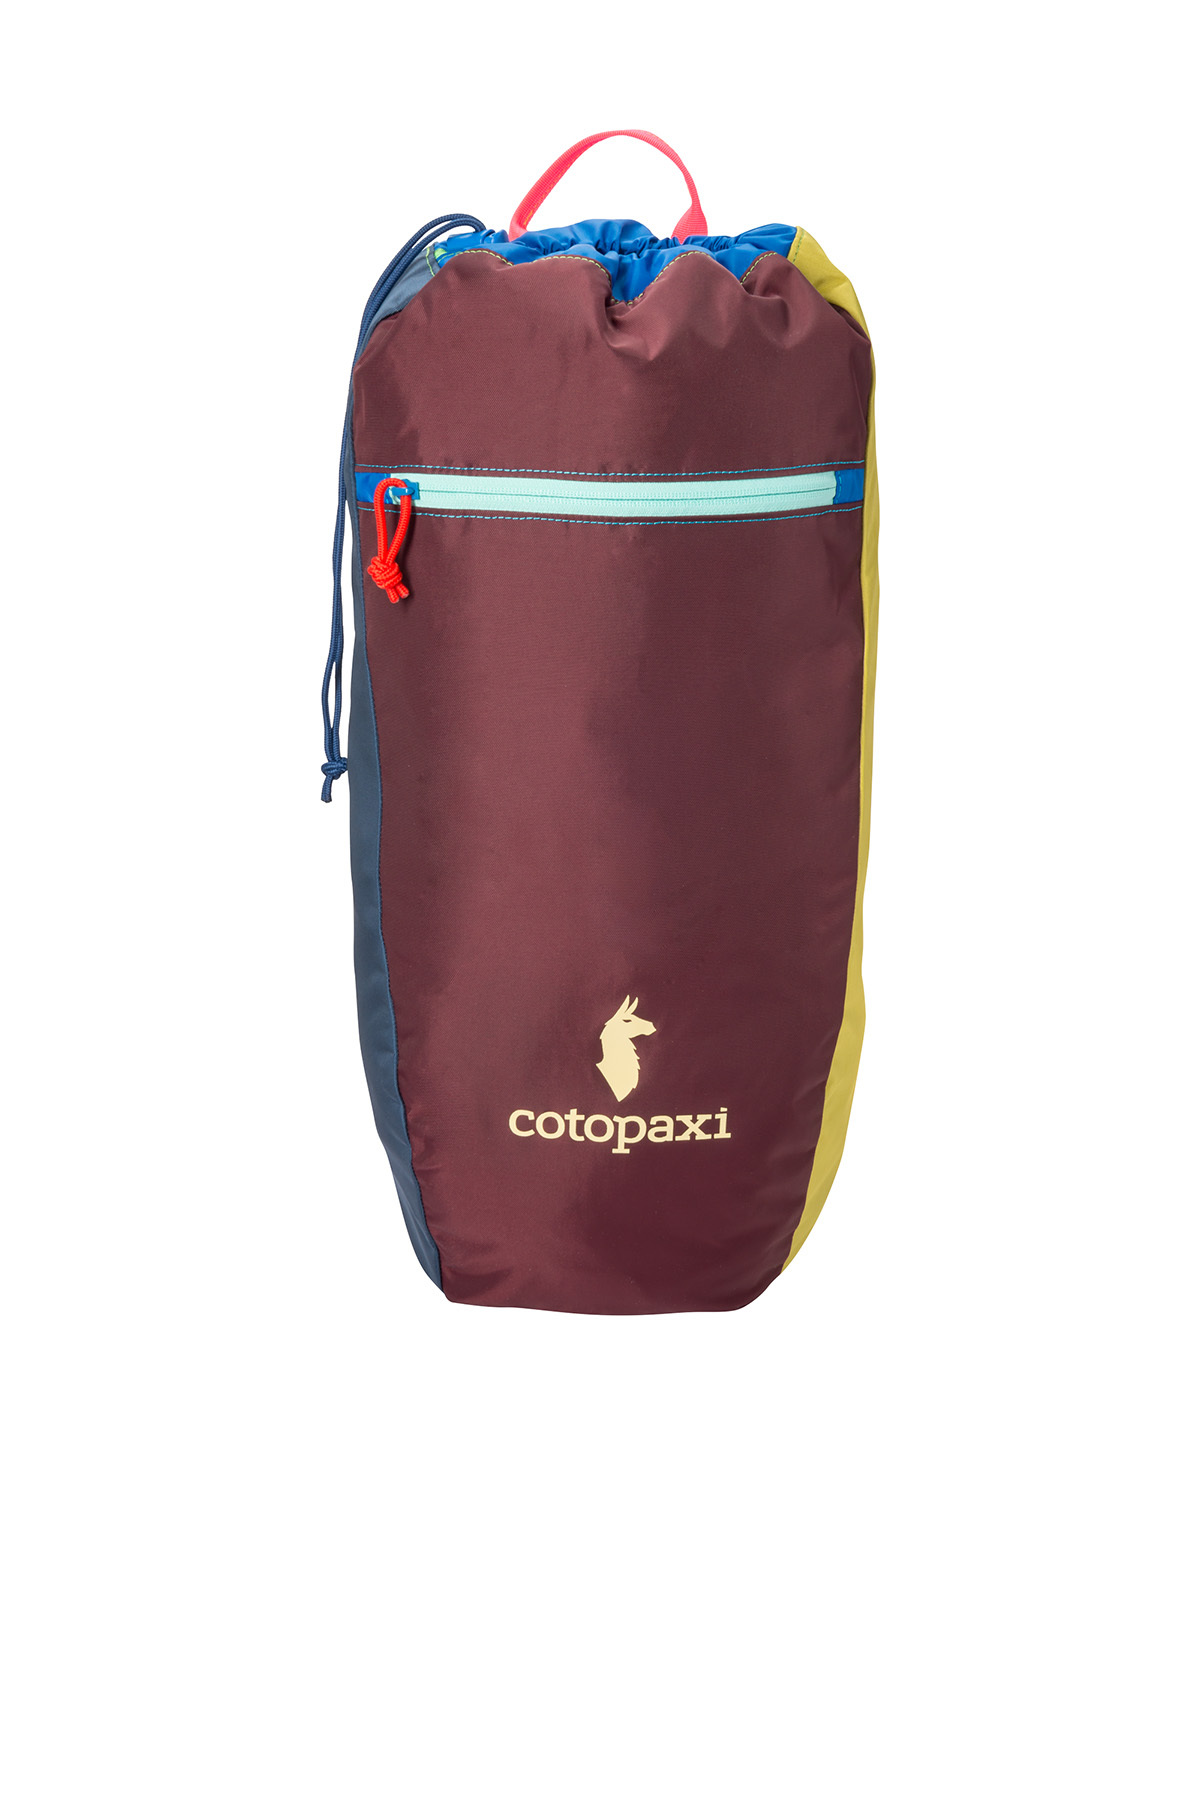 Cotopaxi Luzon 18L Backpack | Product | SanMar